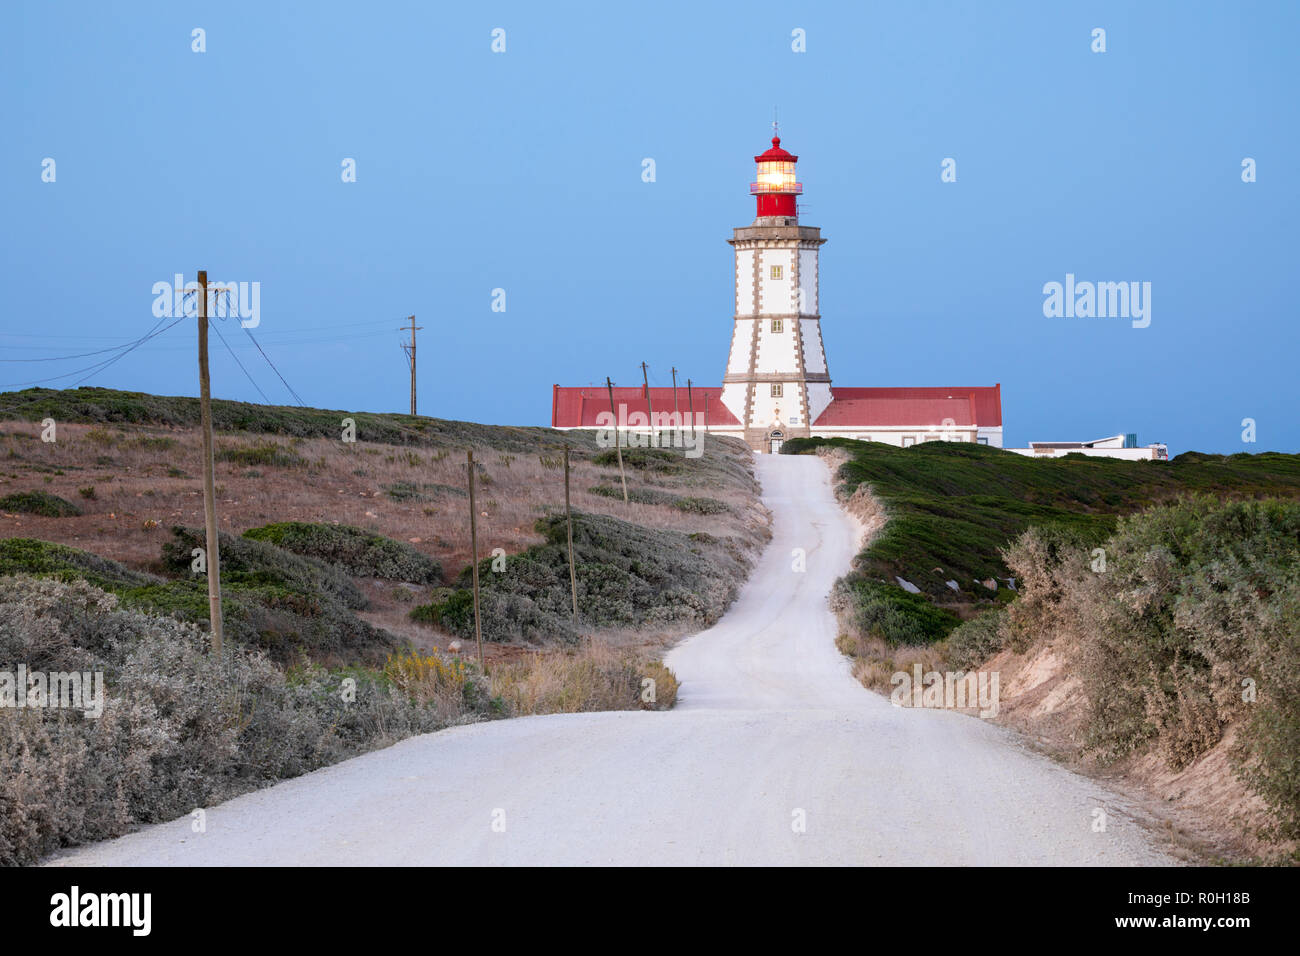 Road leading to Farol do Cabo Espichel lighthouse at dawn, Cabo Espichel, Municipality of Sesimbra, Setubal district, Lisbon region, Portugal, Europe Stock Photo